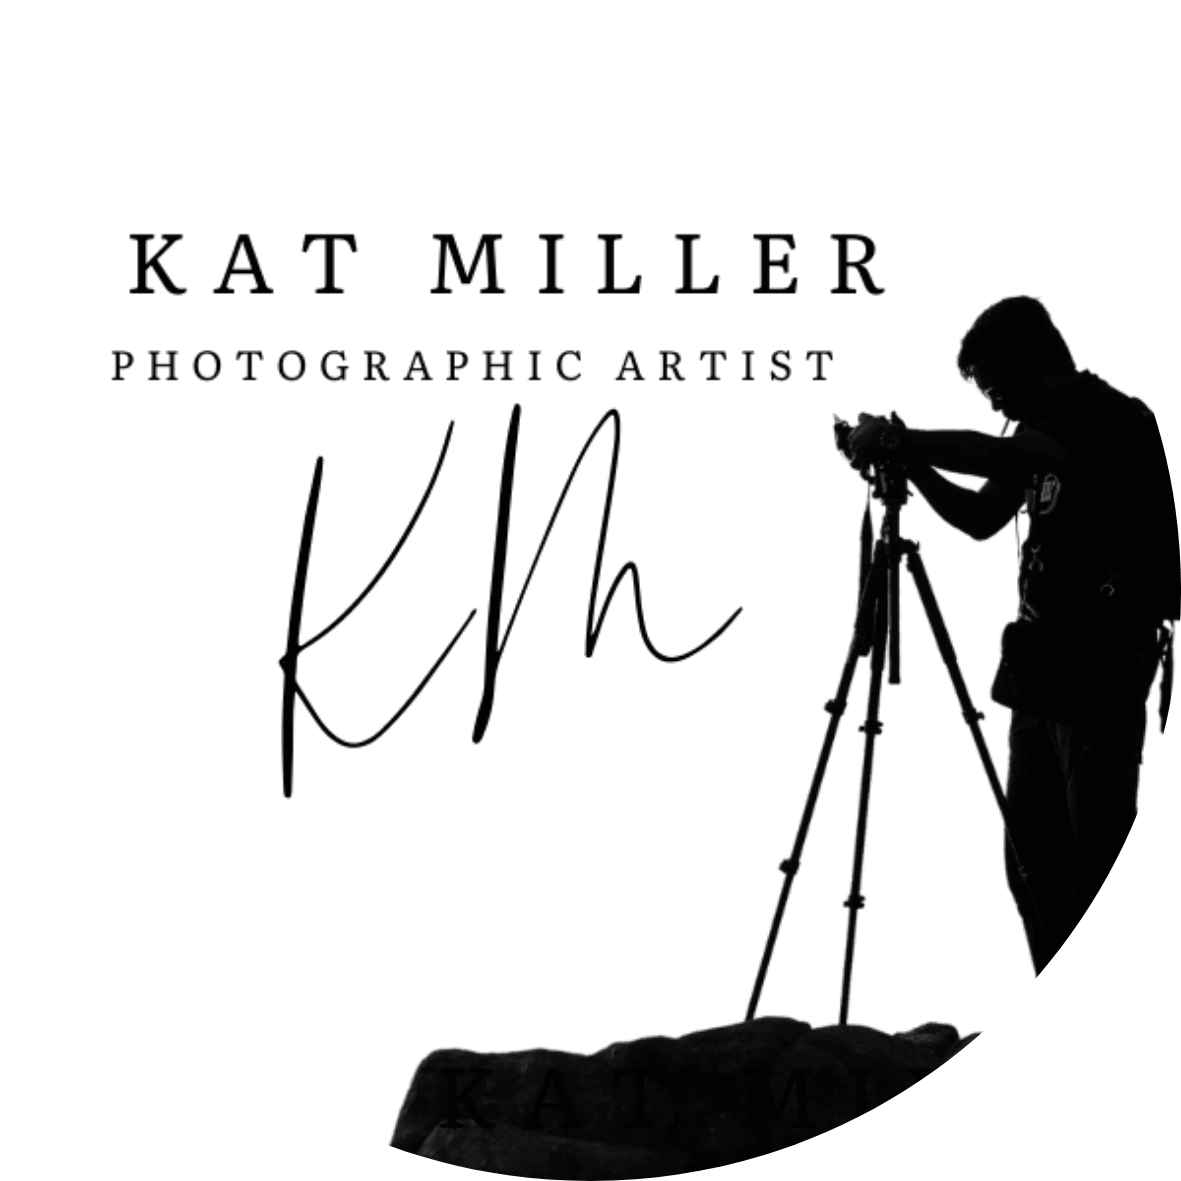 Kat Miller - Photographic Artist